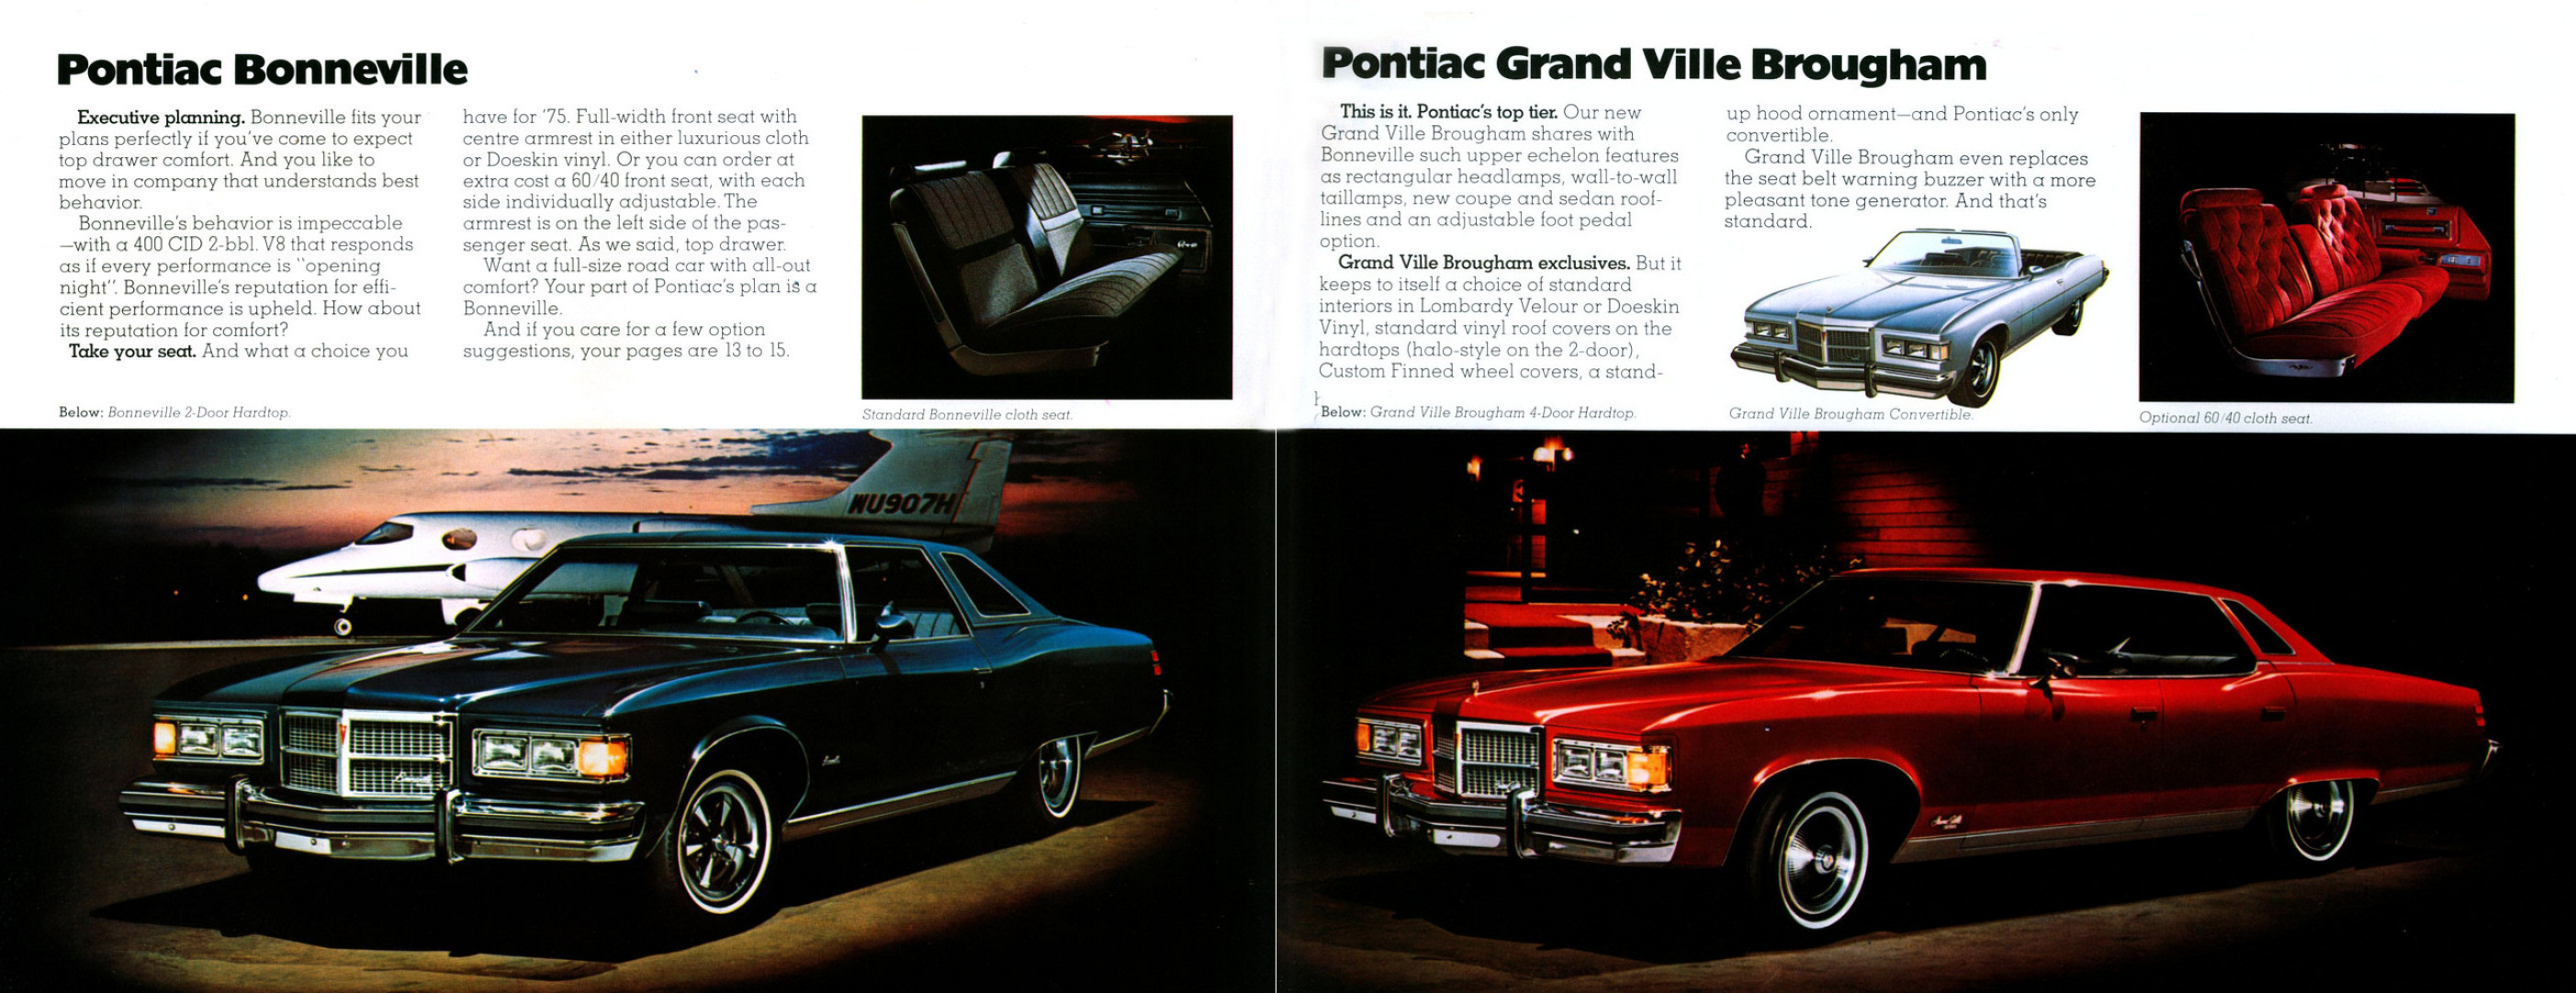 1975_Pontiac_Full_Size_Cdn-10-11